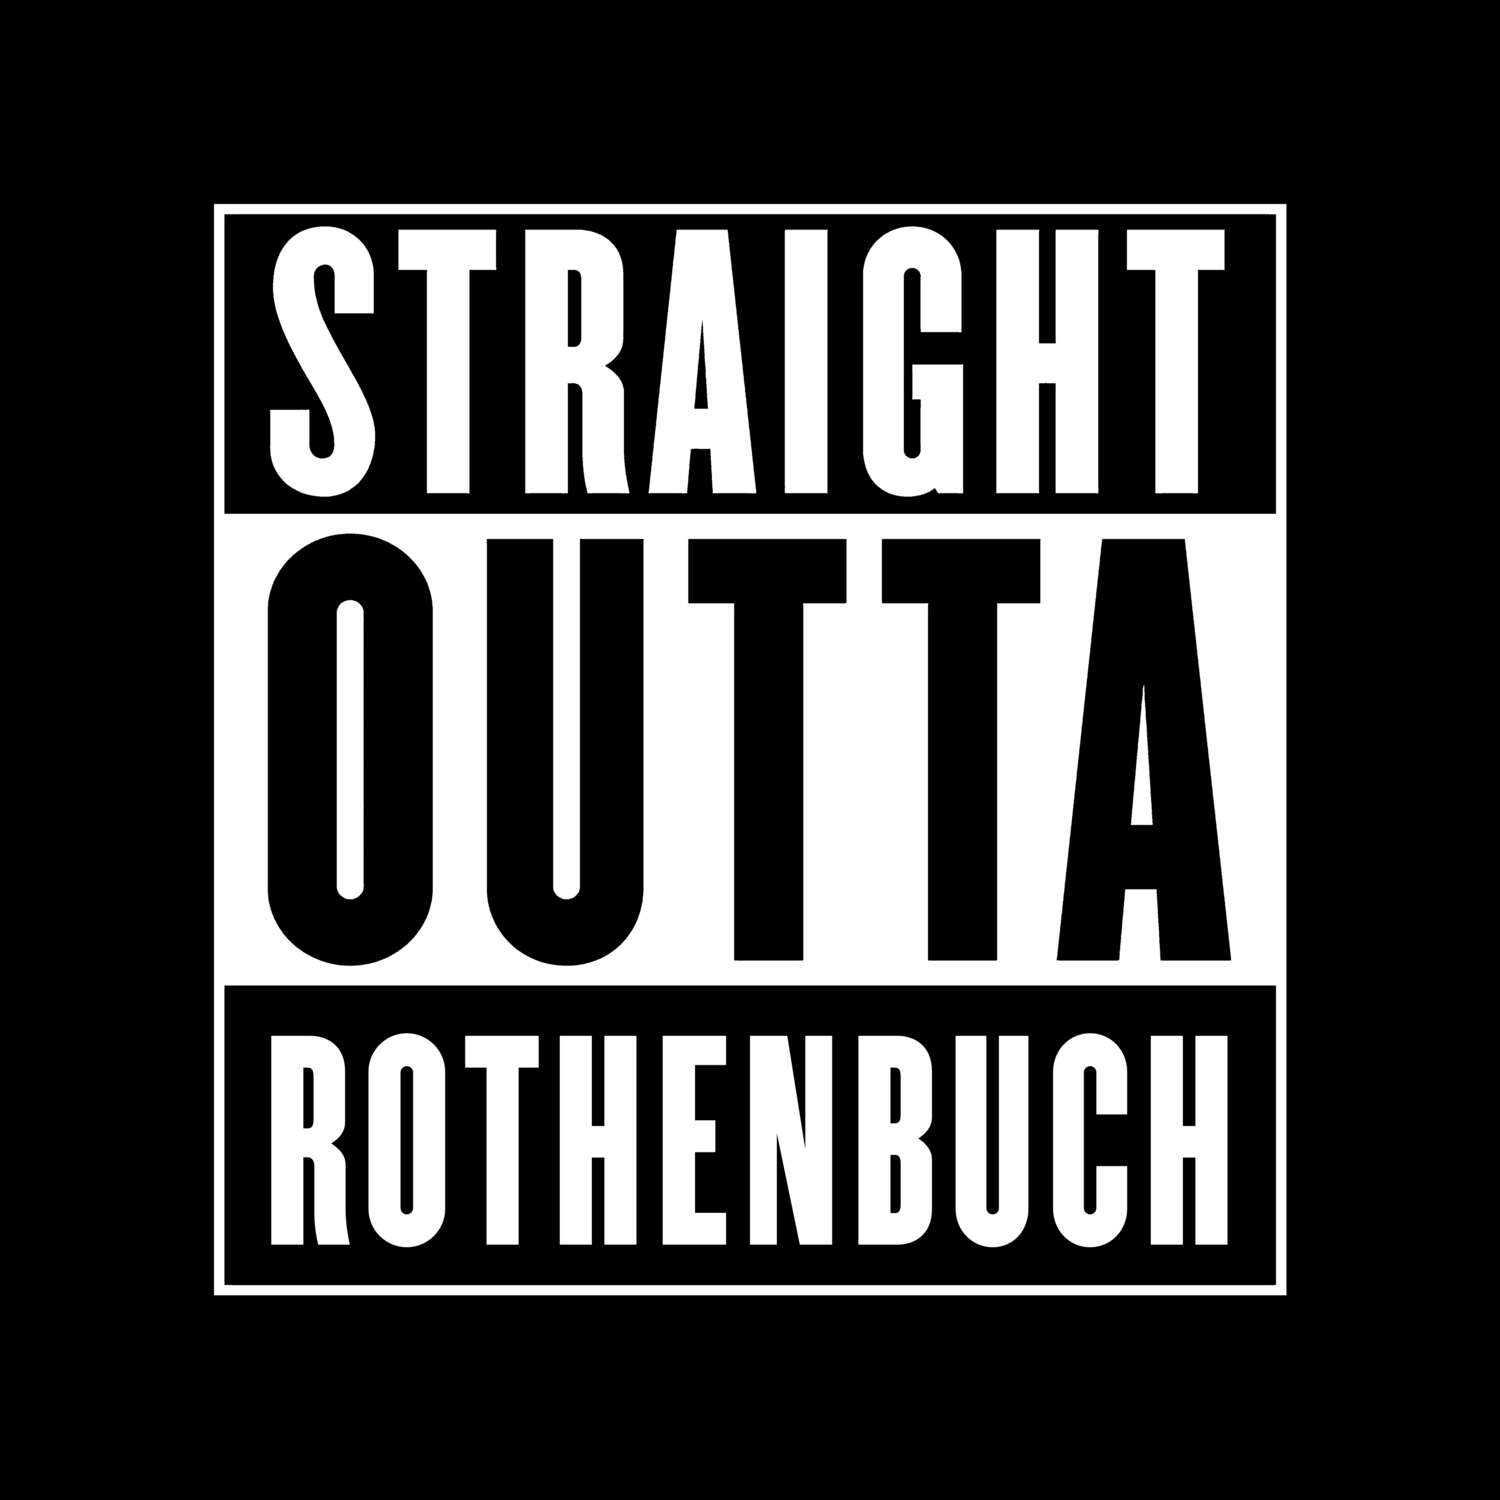 Rothenbuch T-Shirt »Straight Outta«